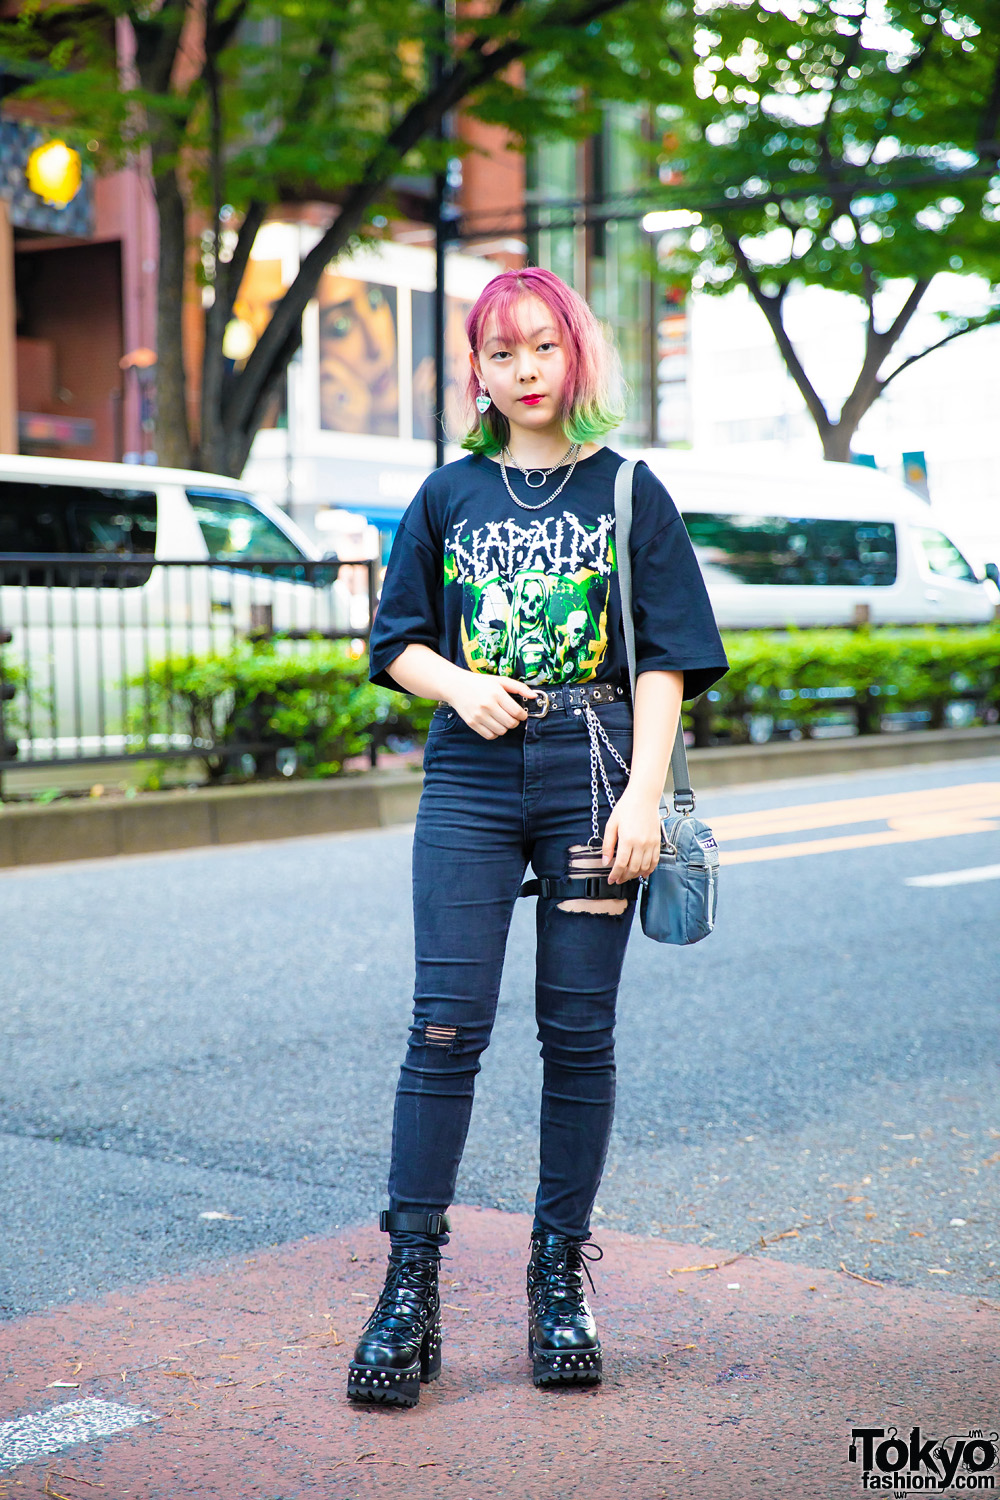 Harajuku Girl w/ Colorful Hair and All Black Vintage & Handmade Street Style